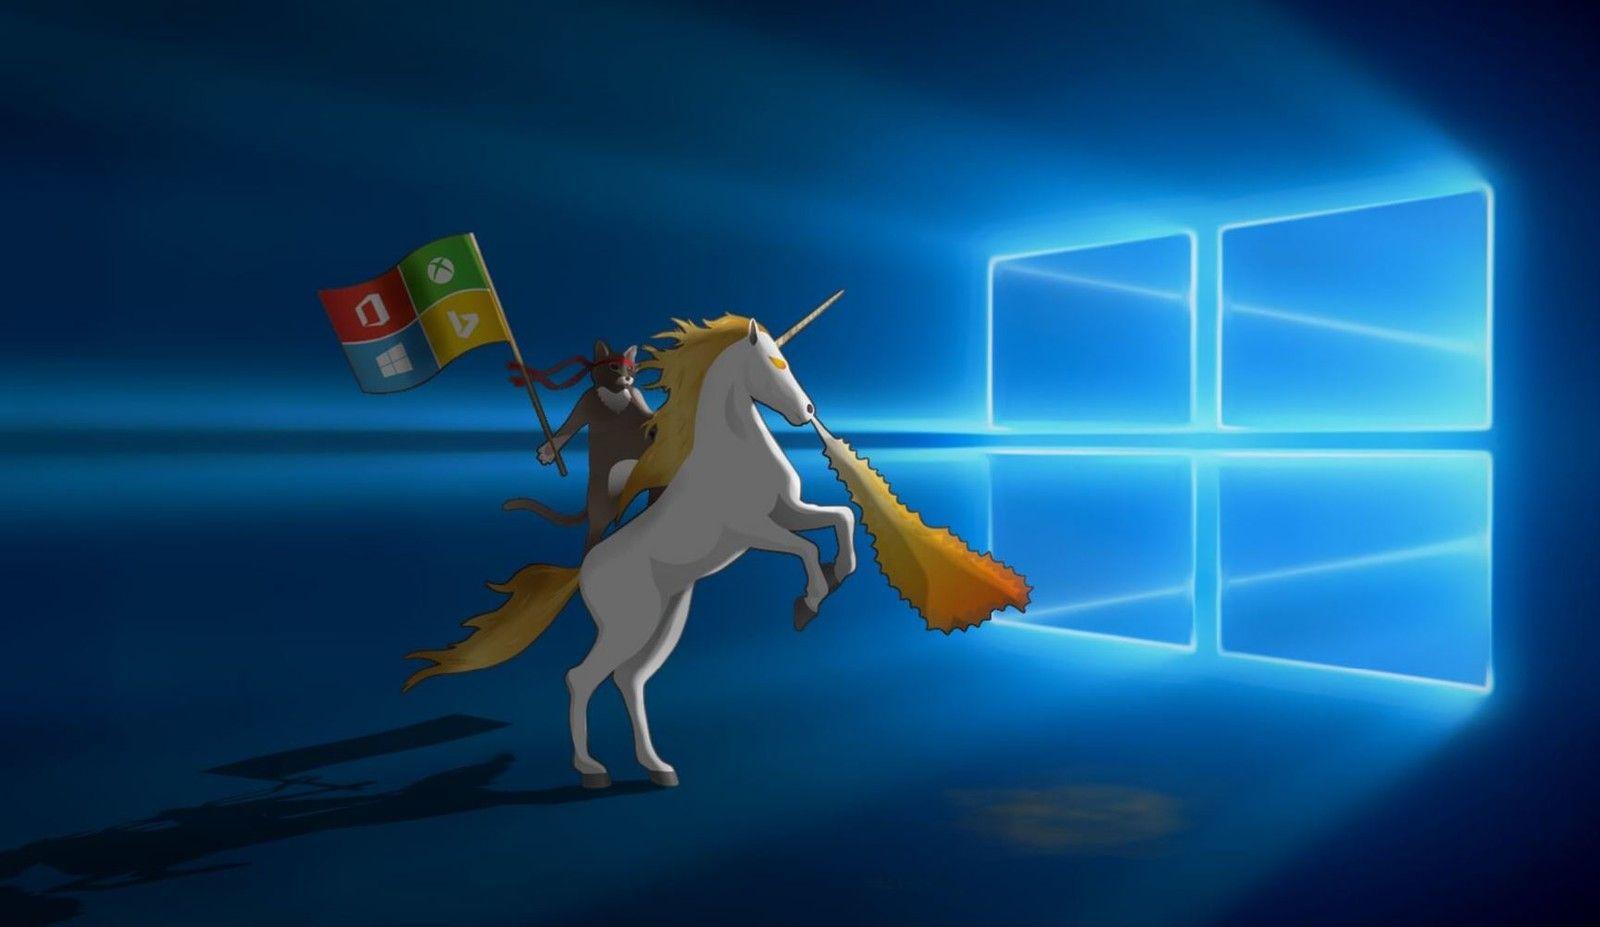 Windows 10 hero wallpaper combined with Ninja Cat on a Unicorn is